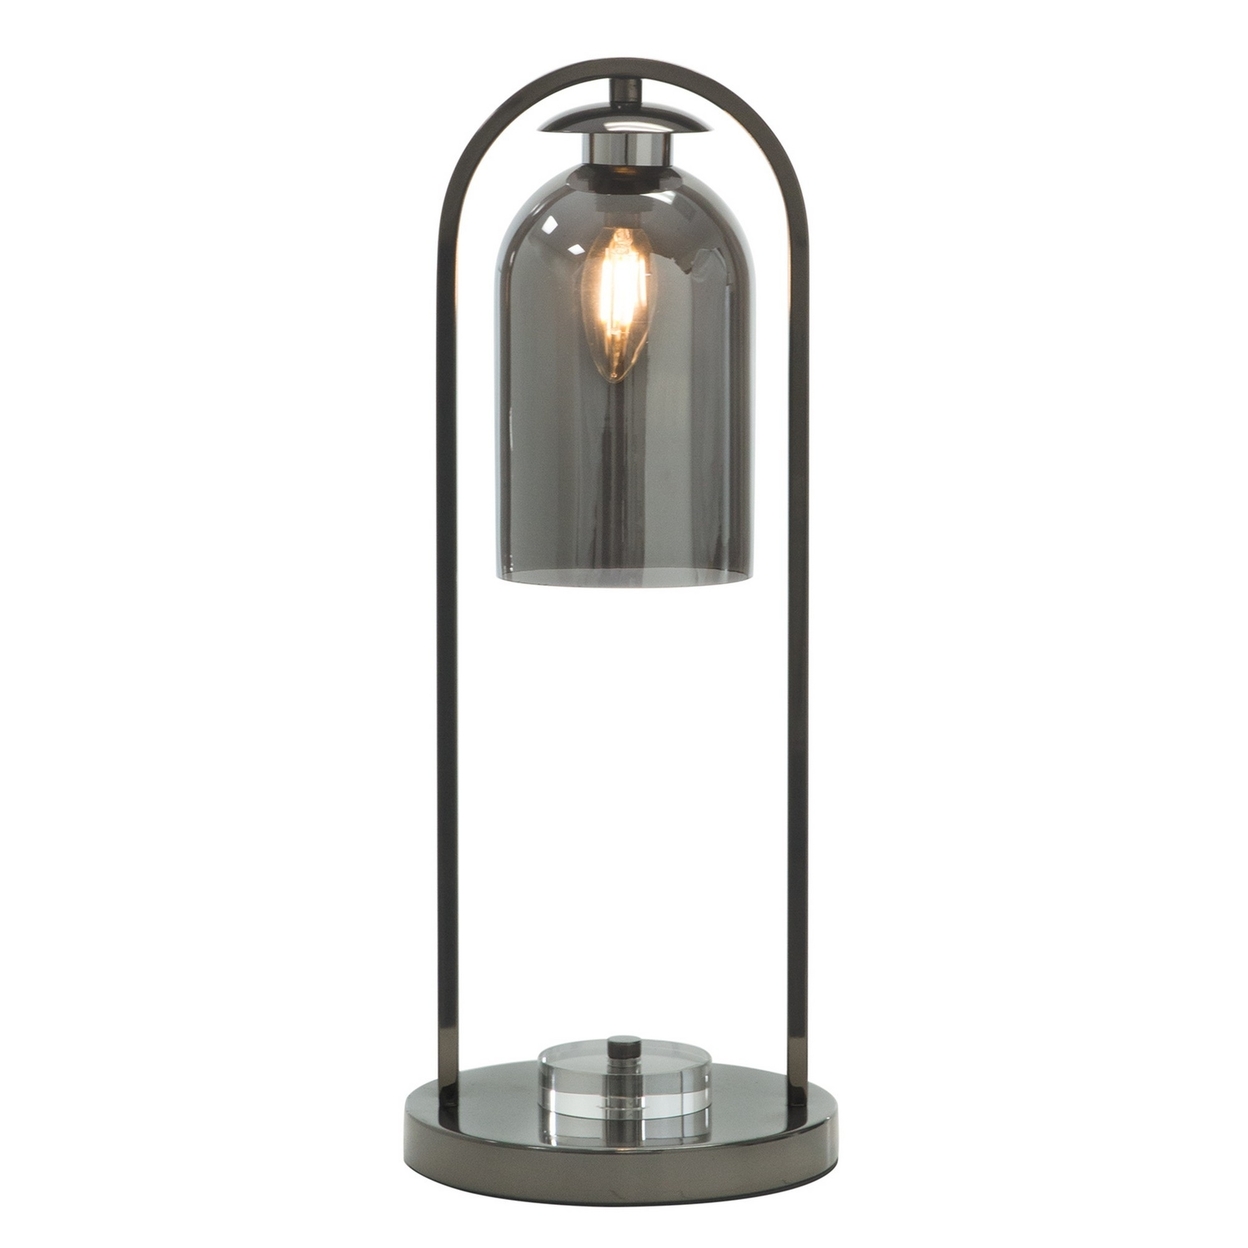 21 Inch Table Lamp, Cylinder Glass Shade, Round Base, Rustic Nickel Gray -Saltoro Sherpi